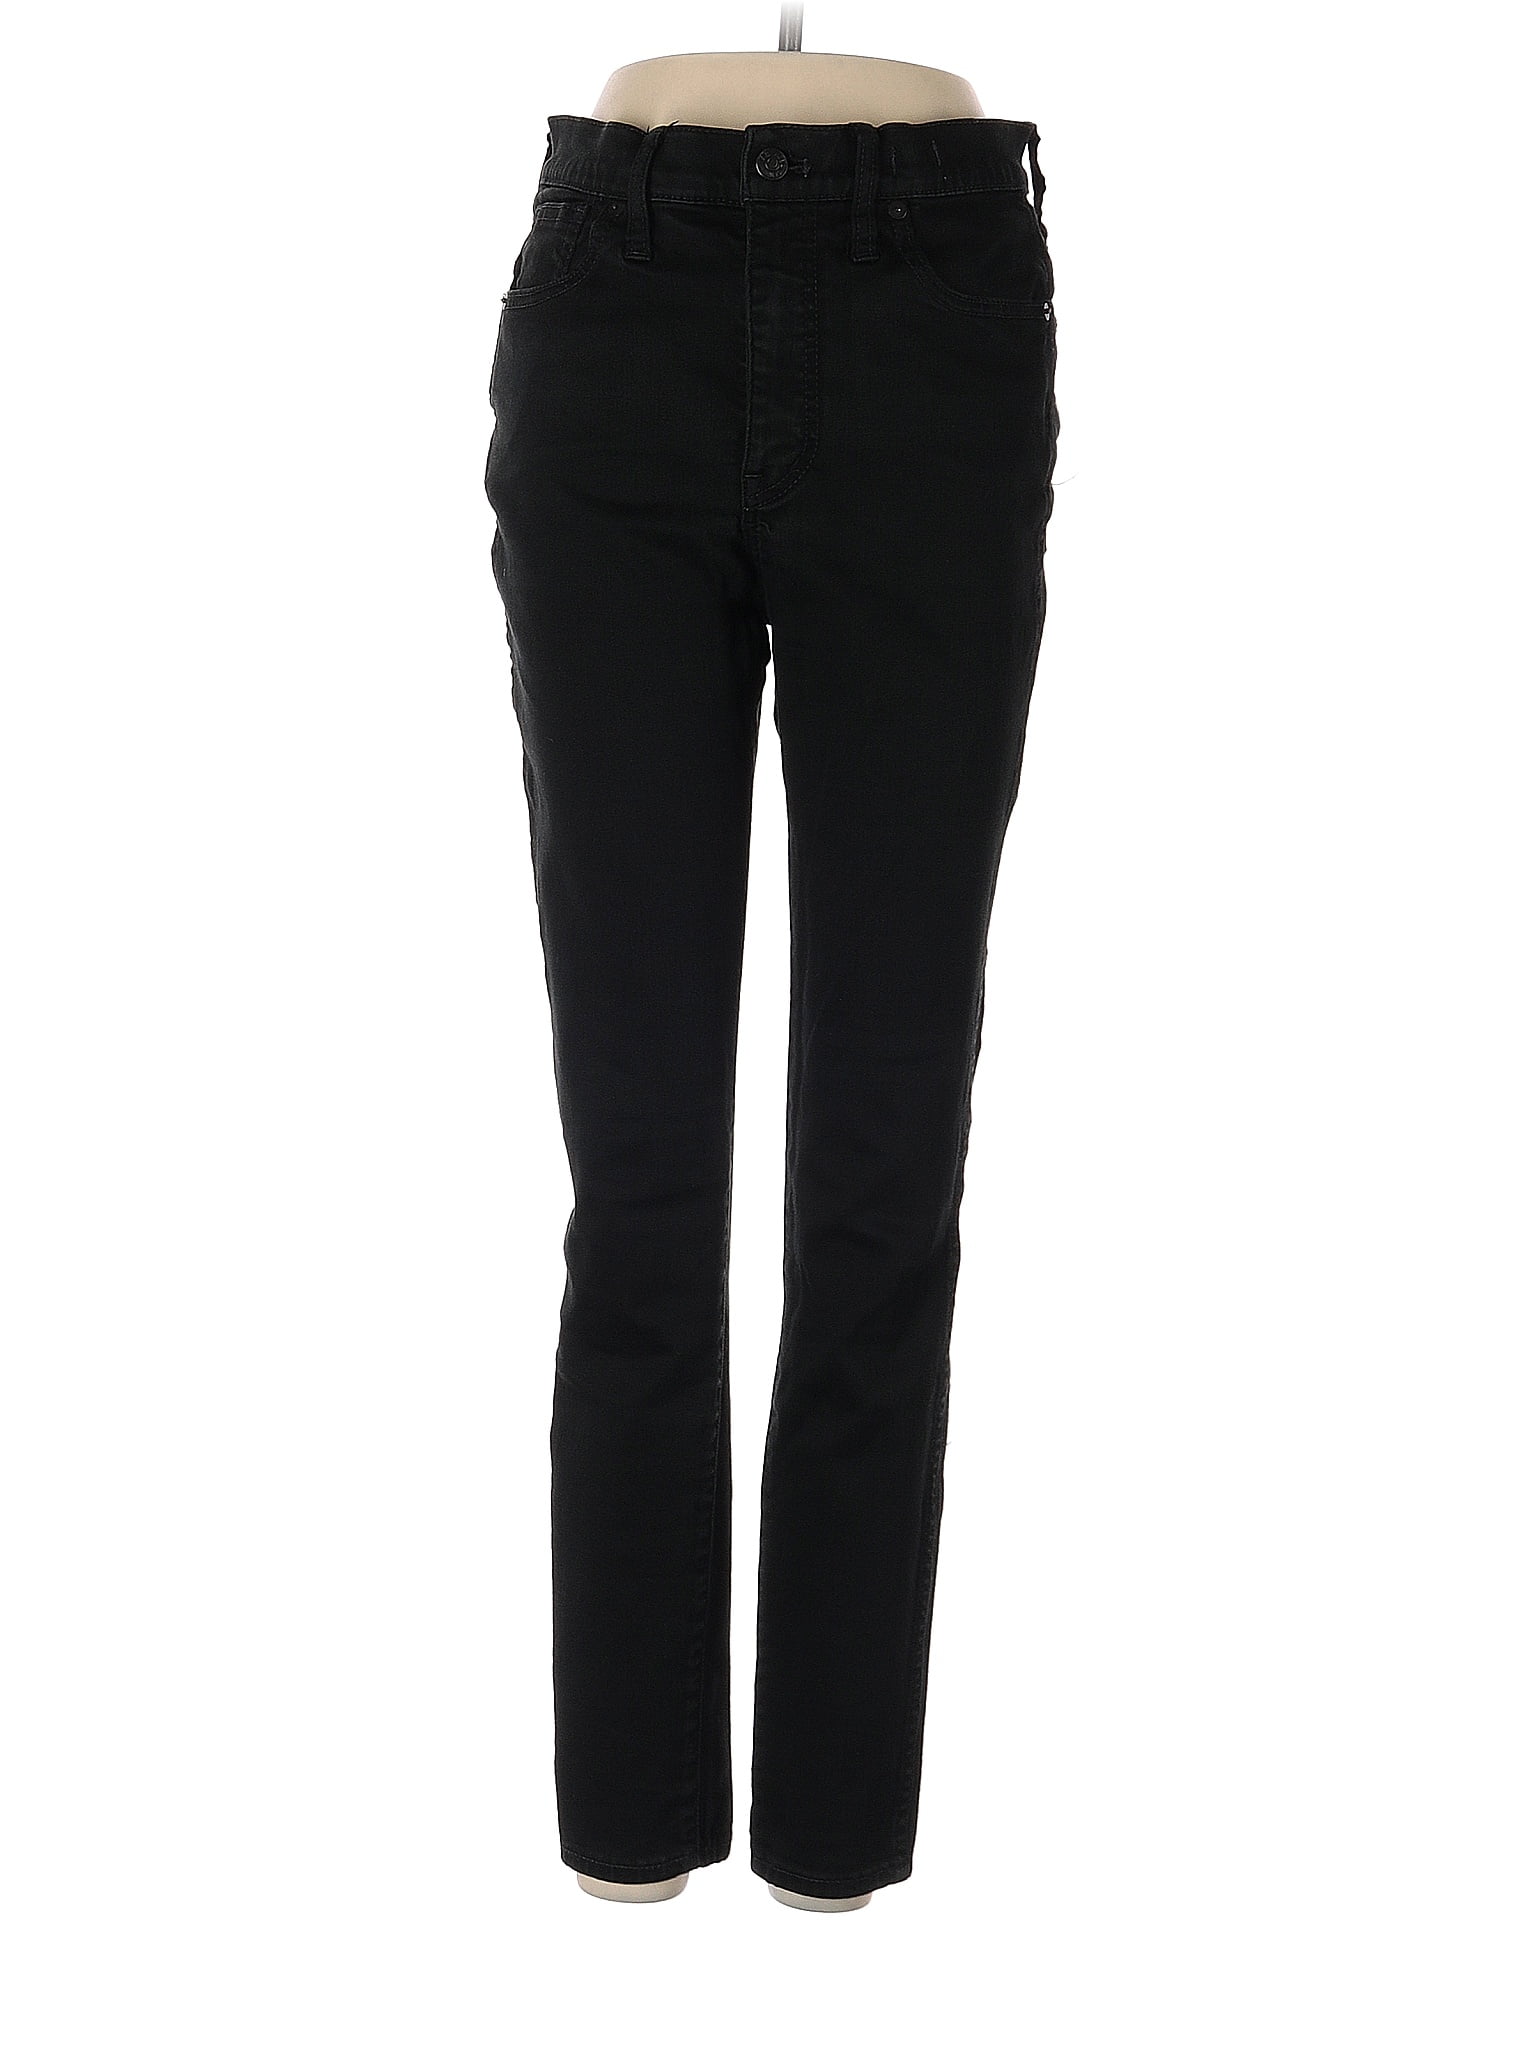 Madewell Solid Black Jeans 28 Waist - 74% off | thredUP